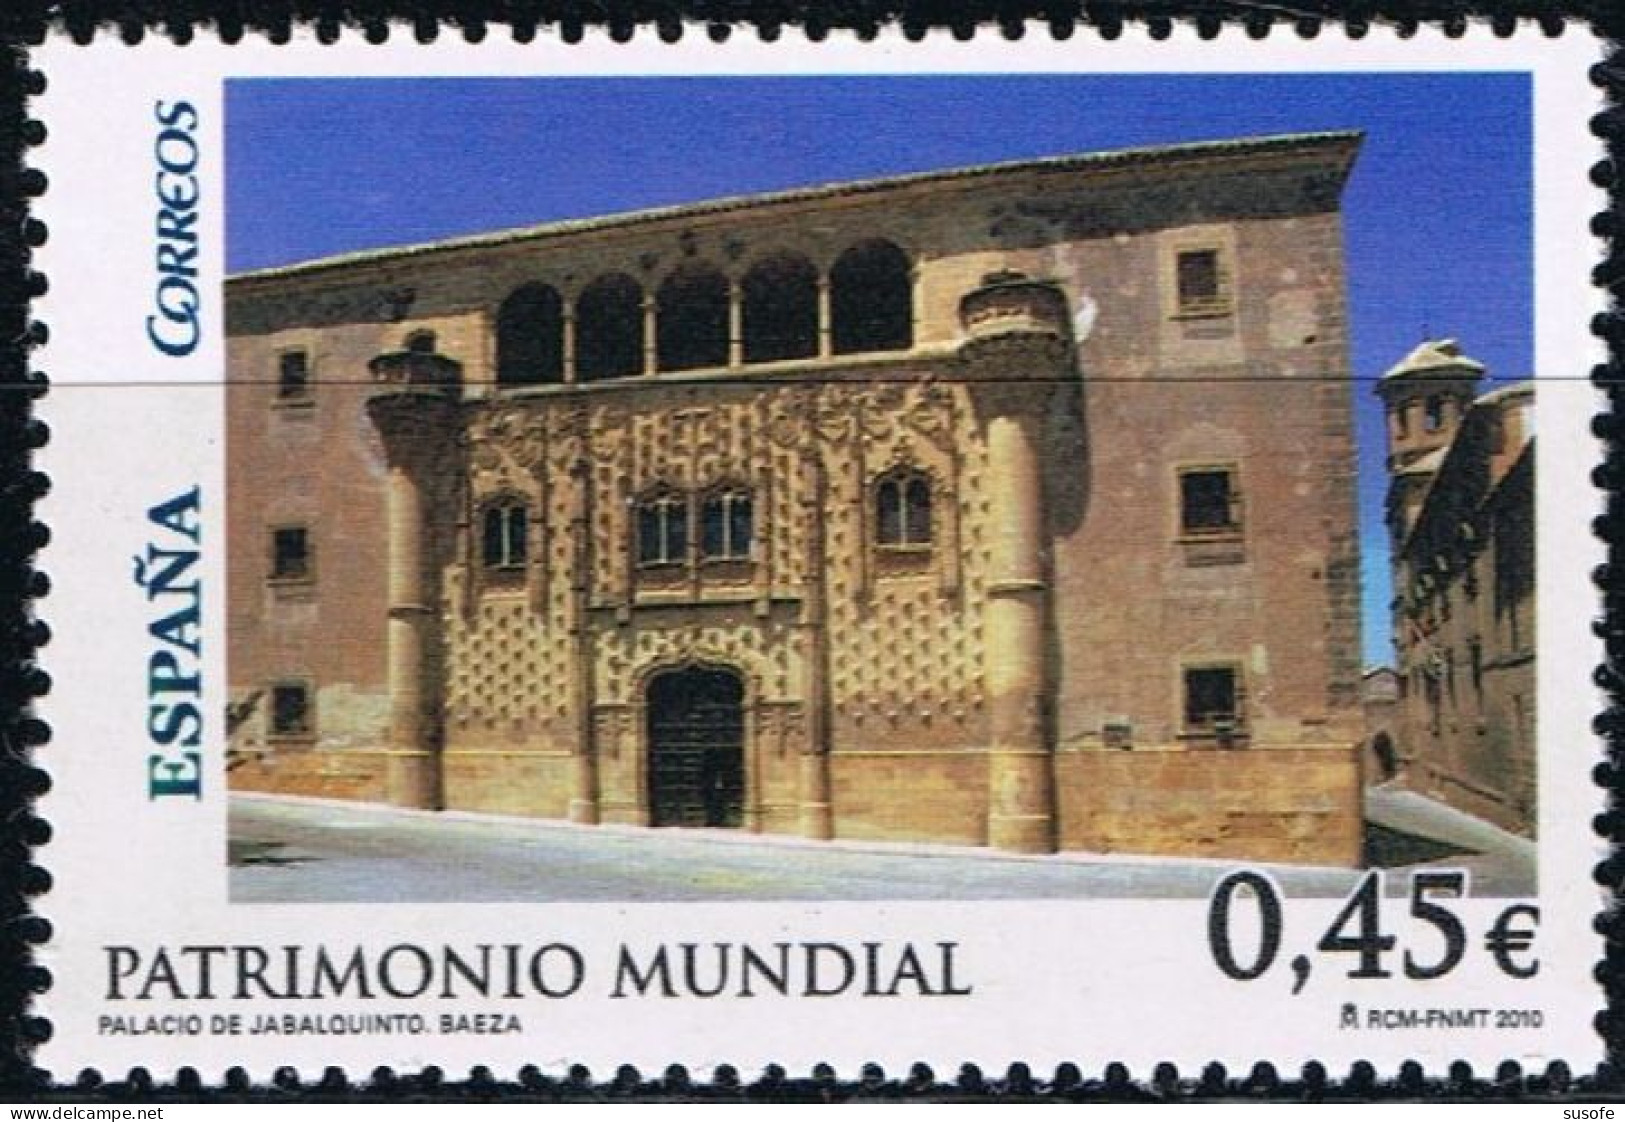 España 2010 Edifil 4557 Sello ** Patrimonio Mundial Palacio De Jabalquinto Baeza (Jaen) Michel 4499 Yvert 4203 Spain - Nuevos